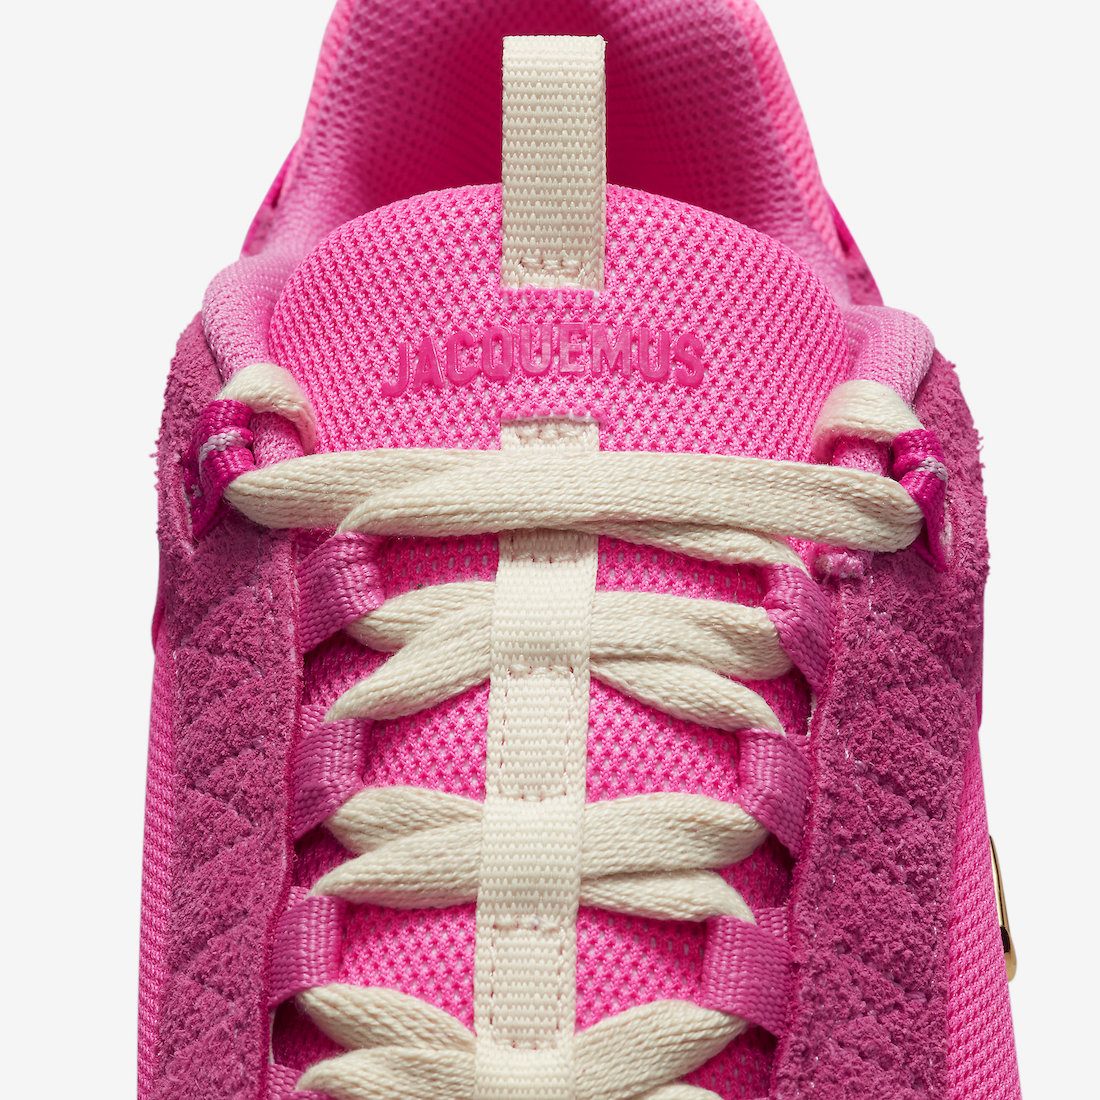 Jacquemus Nike Air Humara Pink DX9999 600 Release Date 8